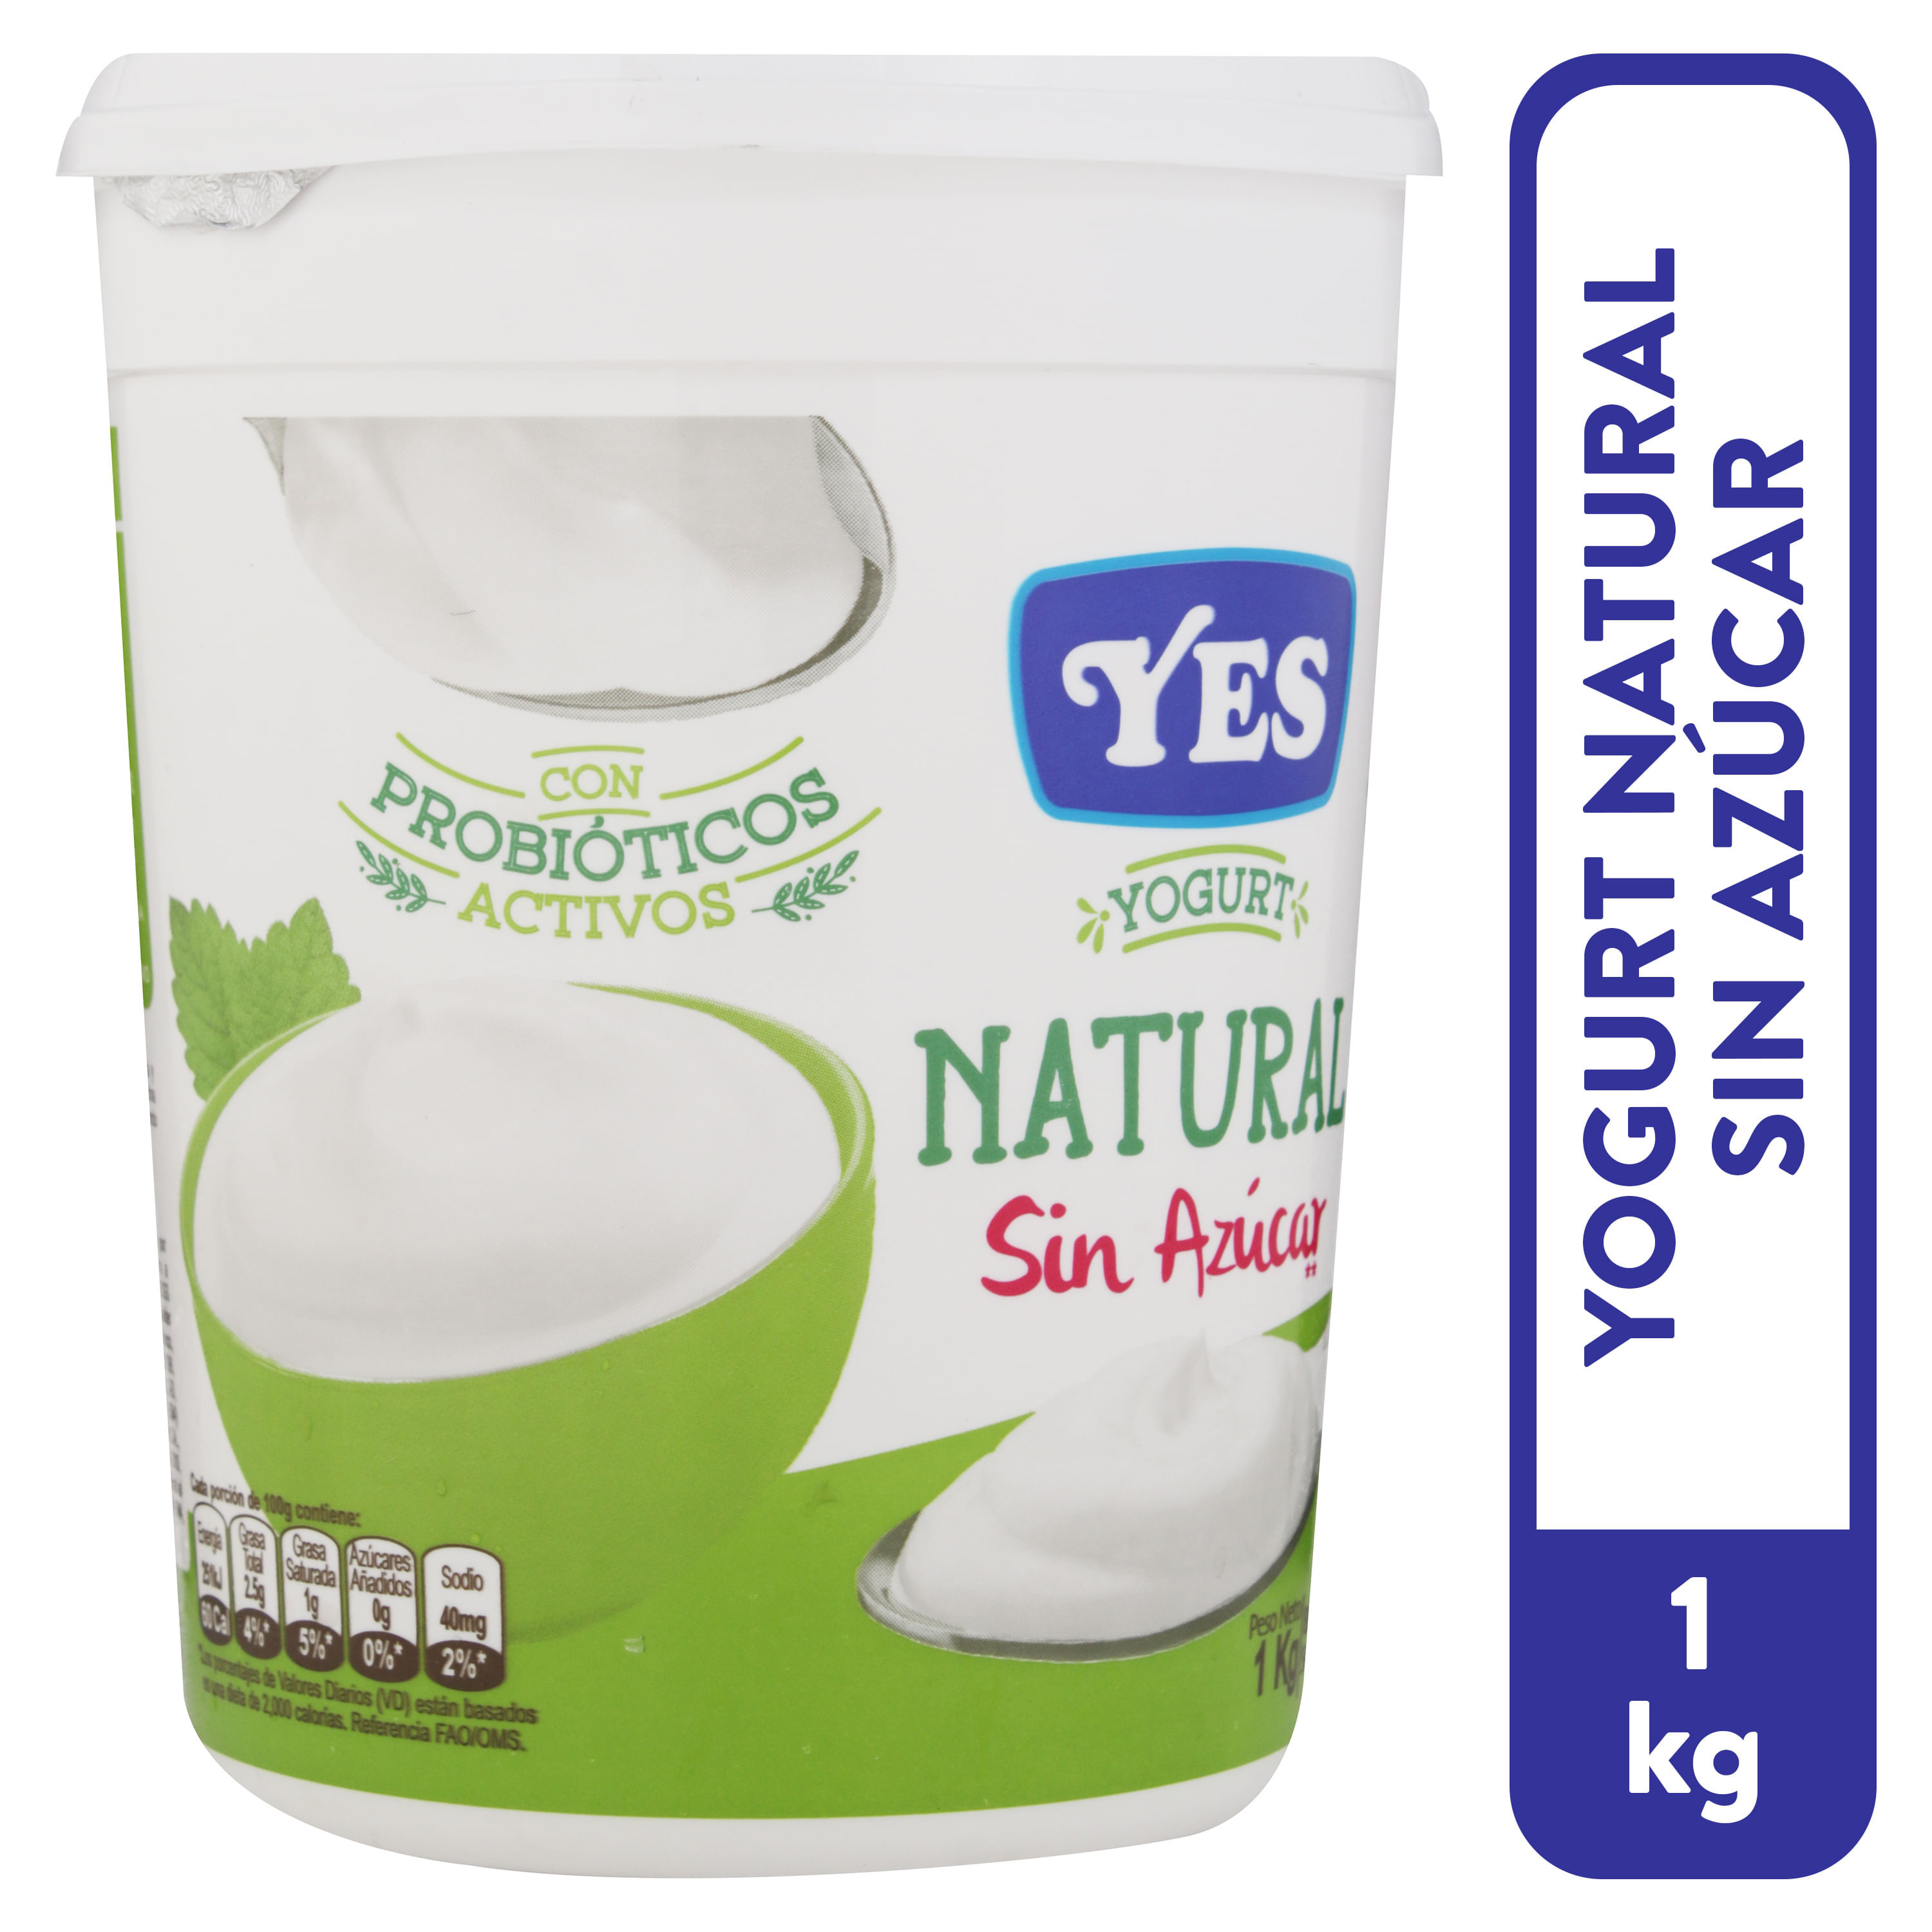 Comprar Yogurt Yes Cremoso Natural - 1000gr